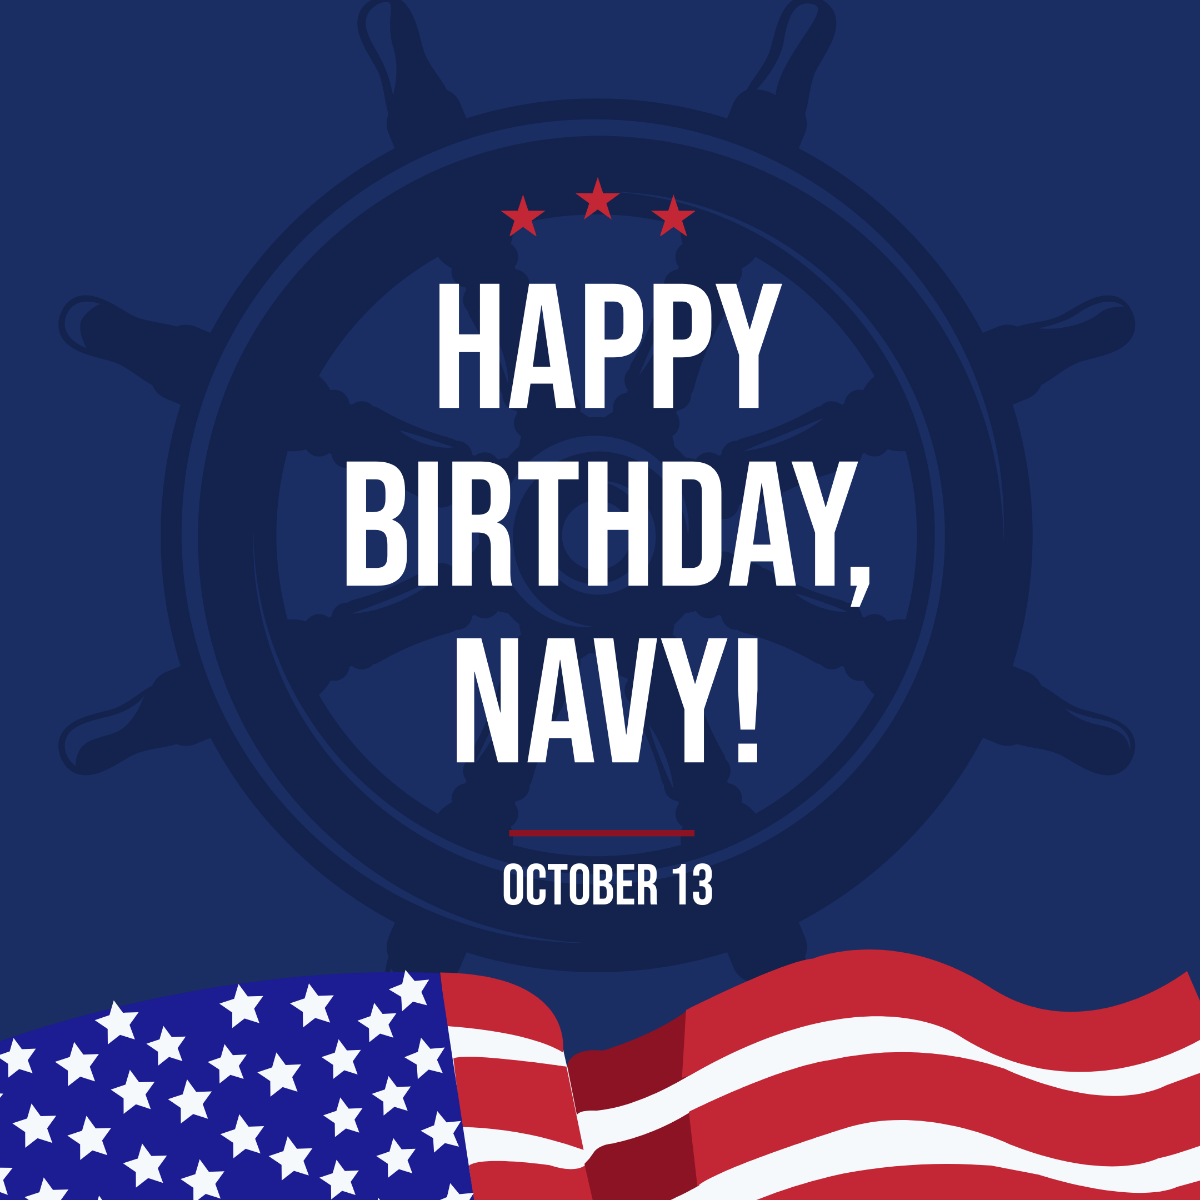 Navy Birthday Banner Template